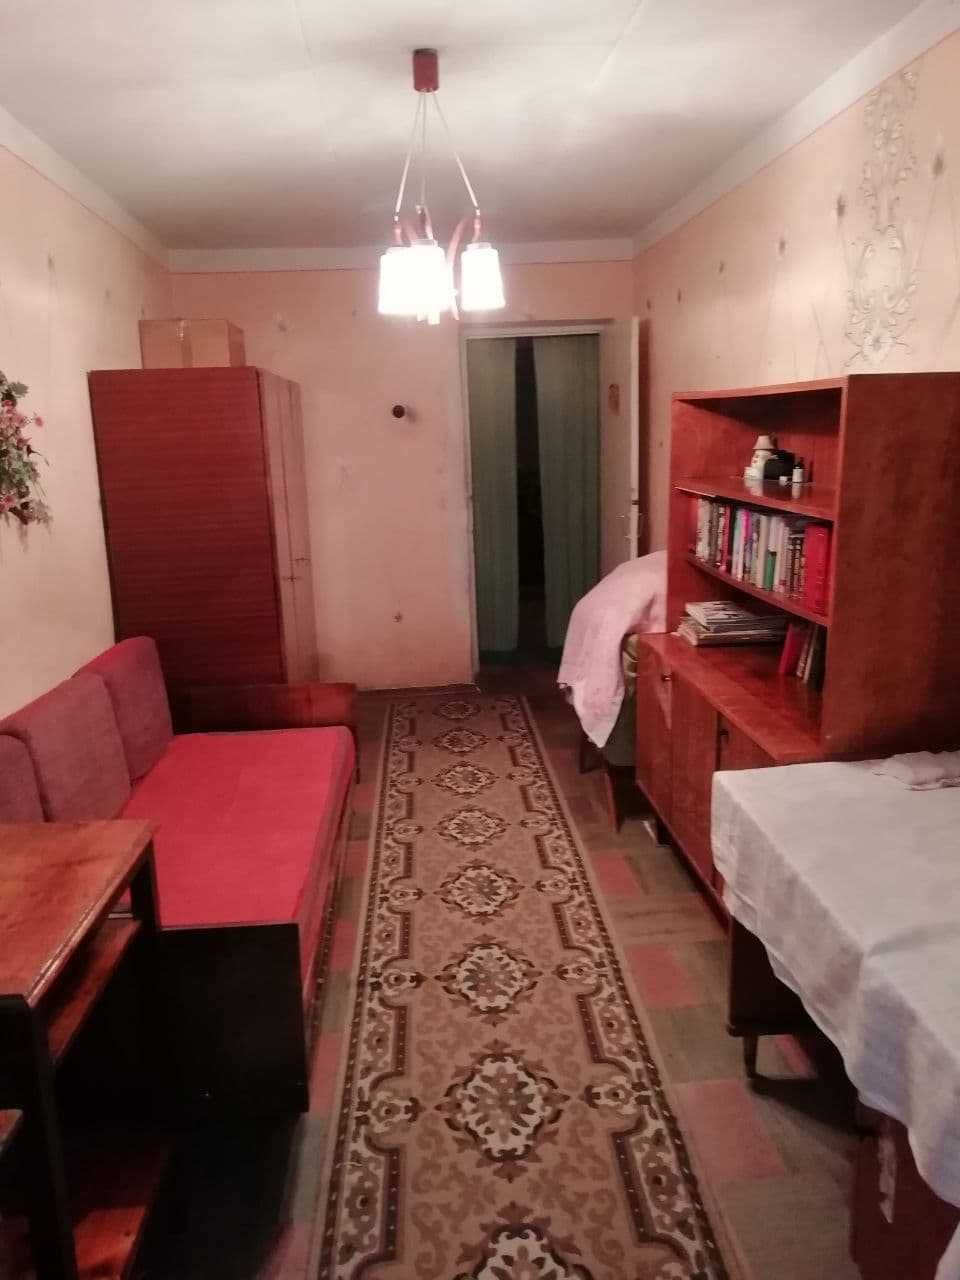 Квартира 3-х комнатная в ЦЕНТРЕ